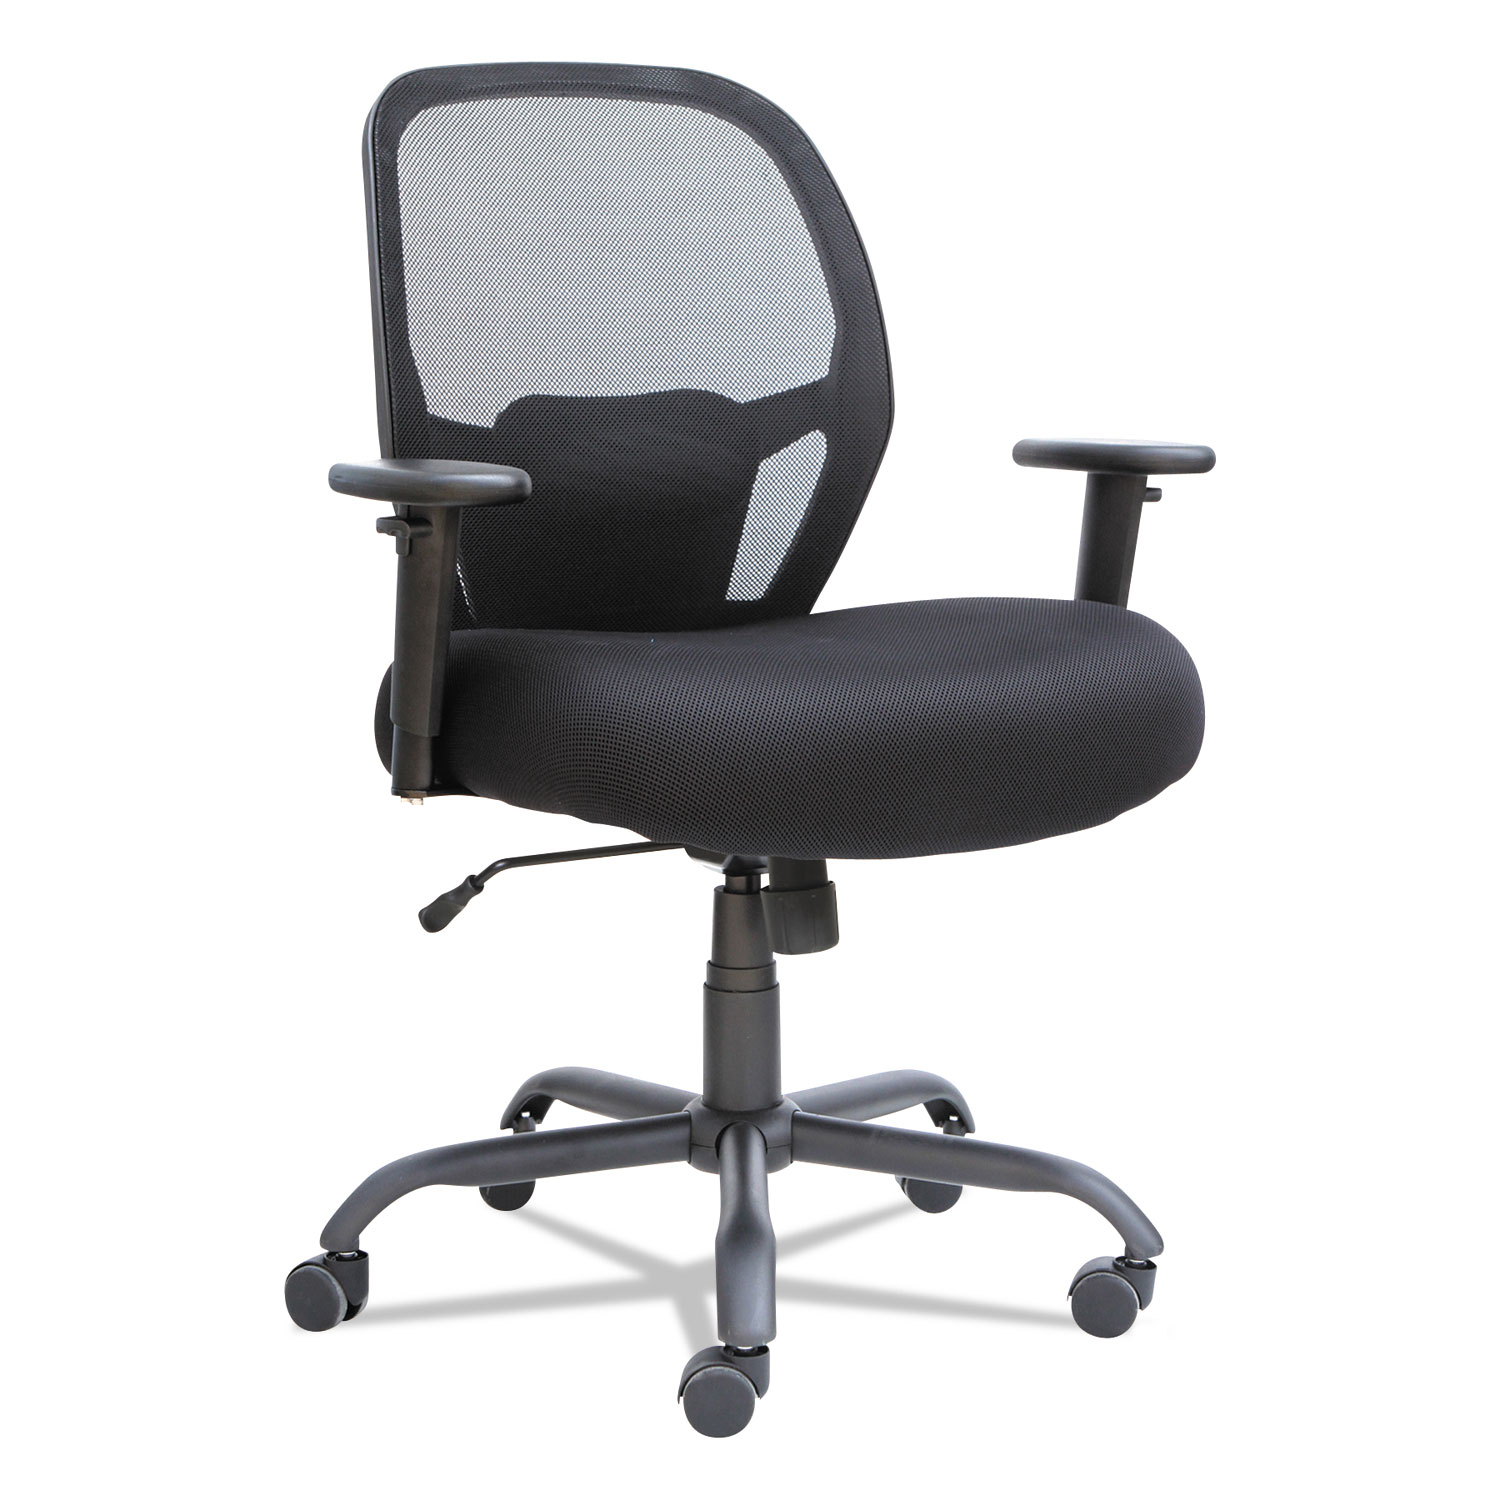  Alera ALEMX4517 Alera Merix450 Series Mesh Big and Tall Chair, Supports up to 450 lbs., Black Seat/Black Back, Black Base (ALEMX4517) 